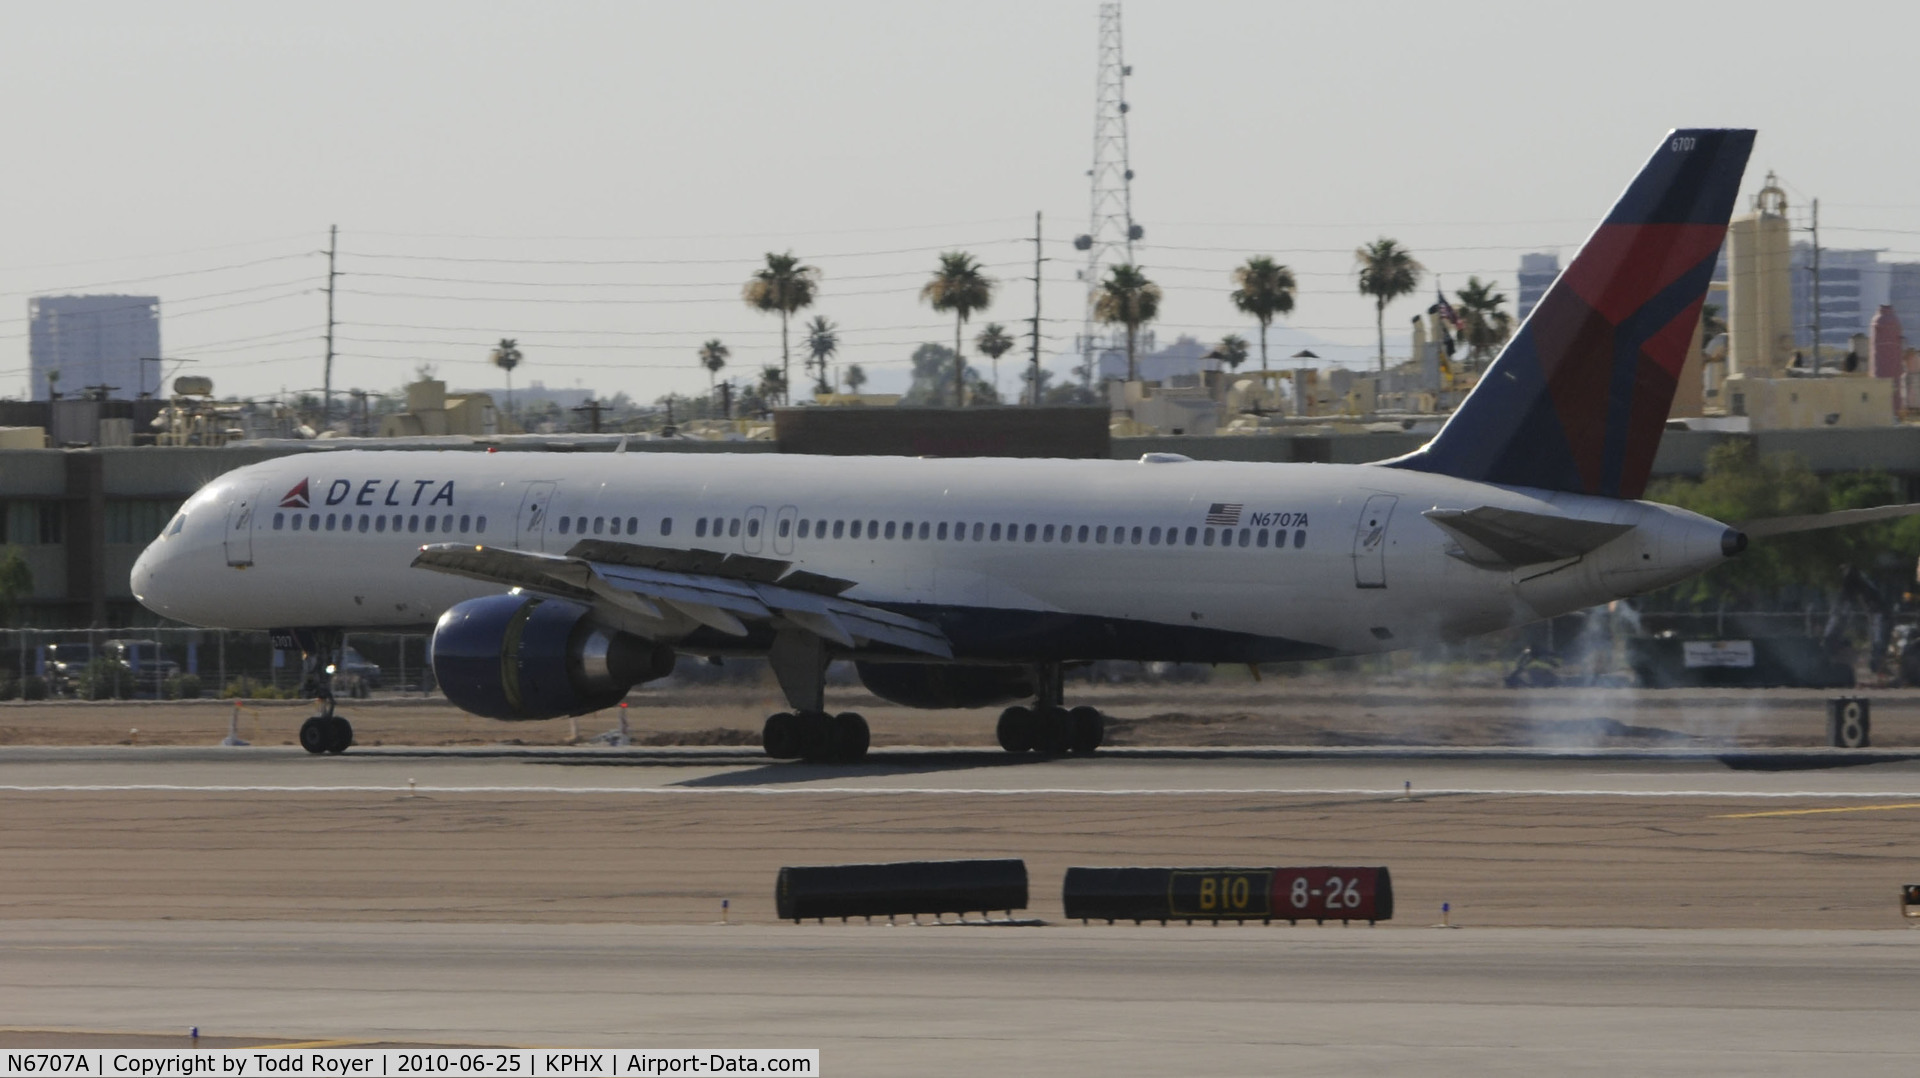 N6707A, 2000 Boeing 757-232 C/N 30395, Landing at PHX